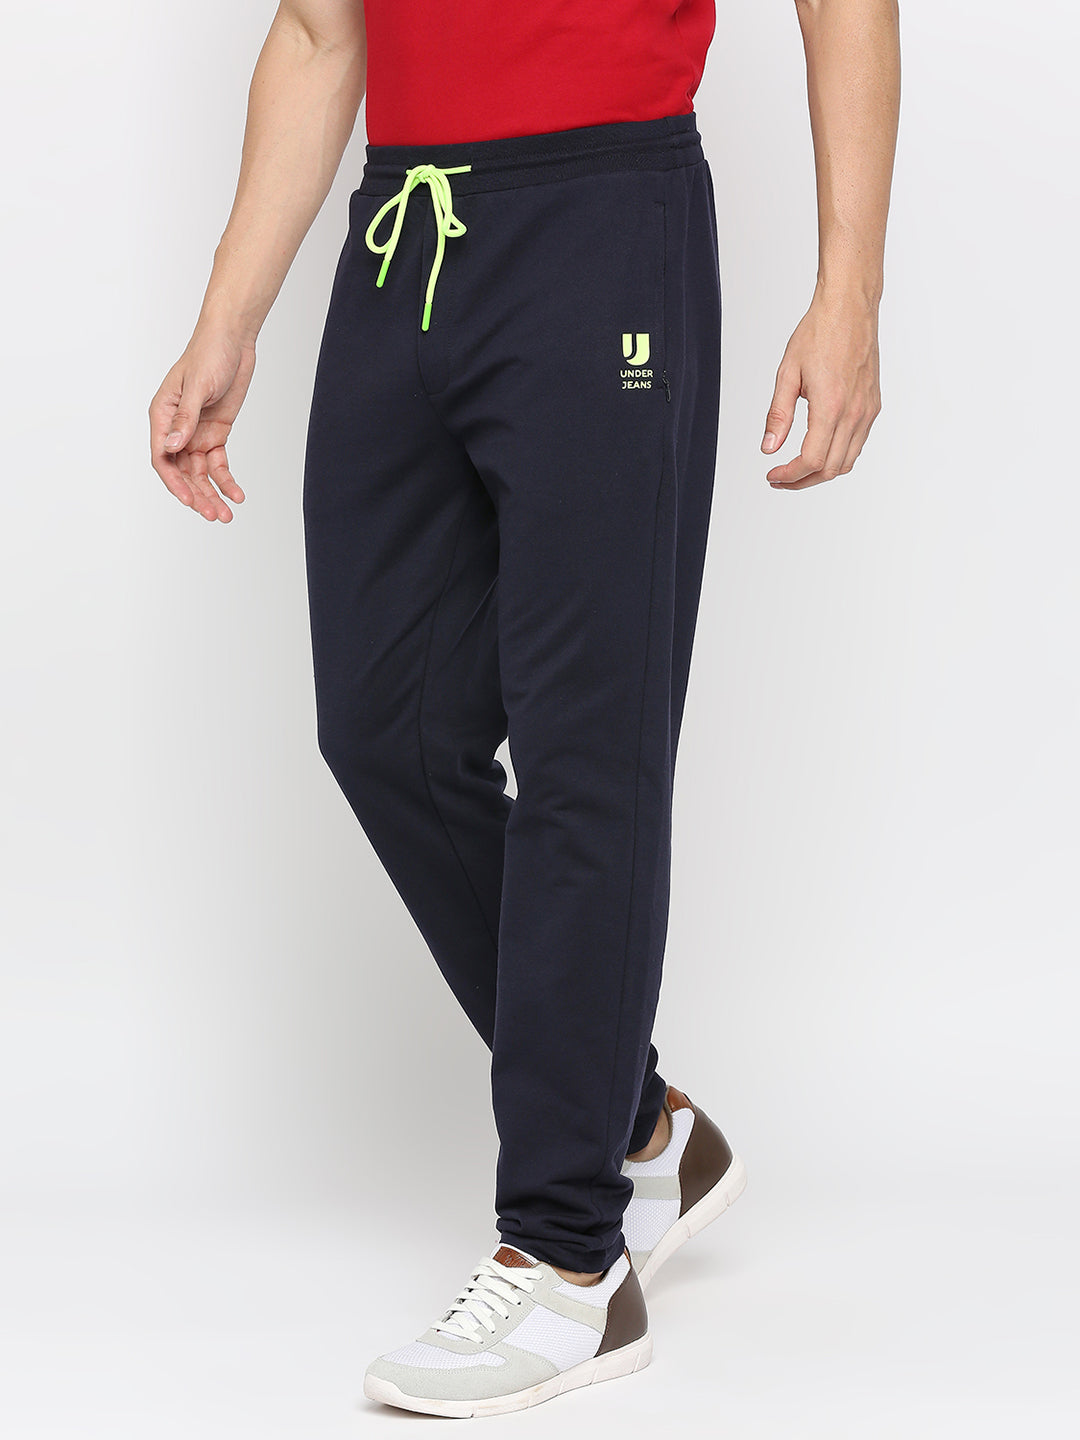 100% Cotton Pants for Men and Women| Double Side Zipper pocket | Sleepwear  Pyjama for Mens | Trousers | Night Pants | Jogging Trackpants